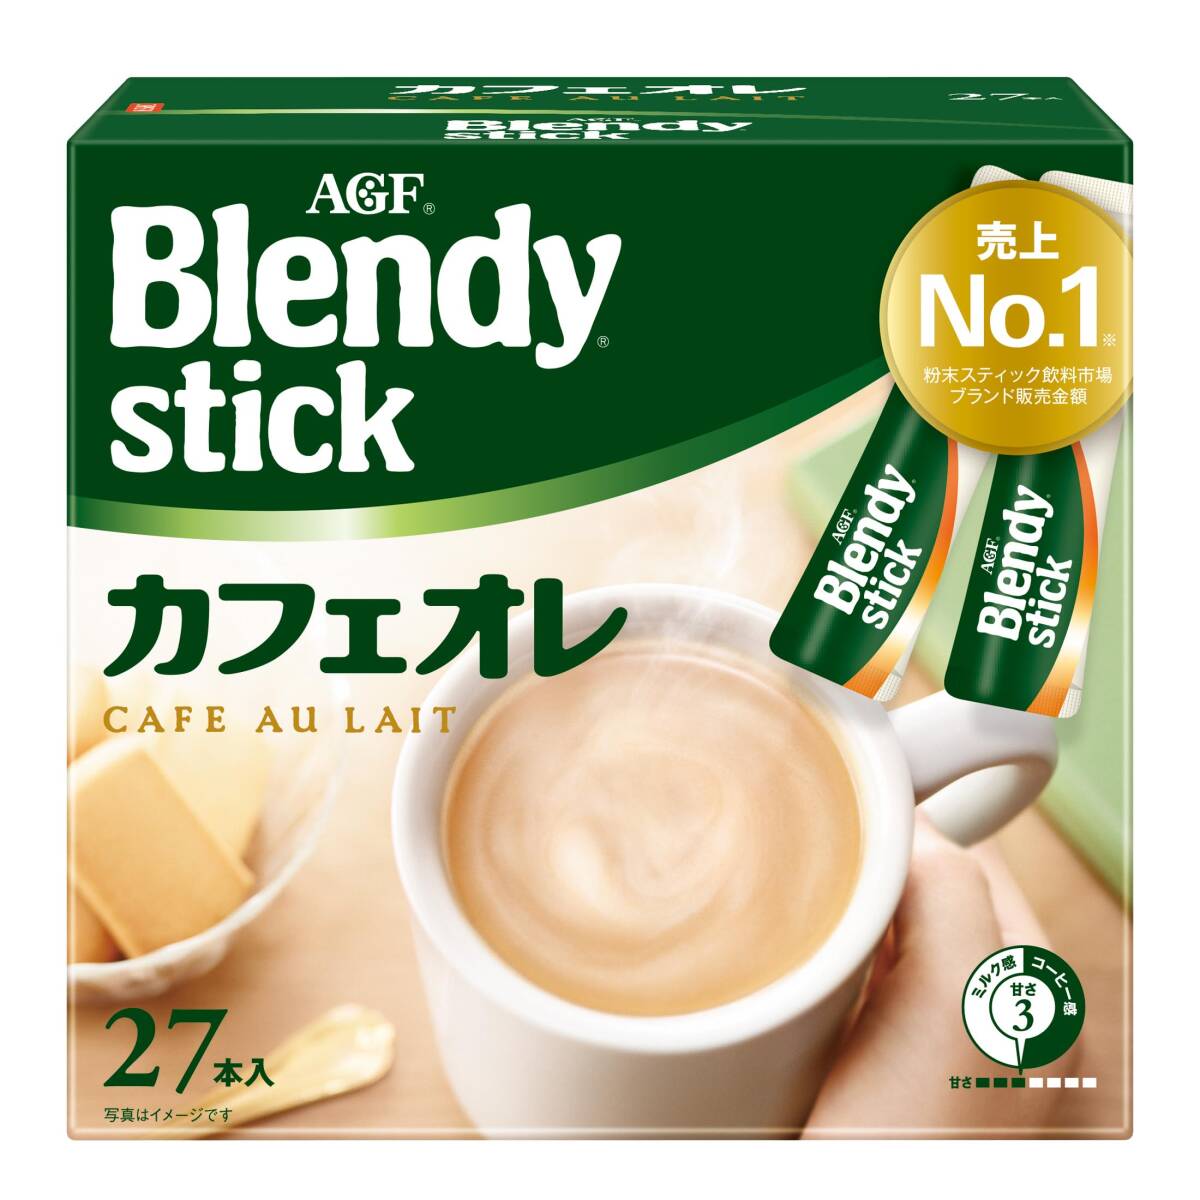 AGF(e-ji-ef)b Len ti stick cafe au lait [ stick coffee ] 27 piece (x 1)